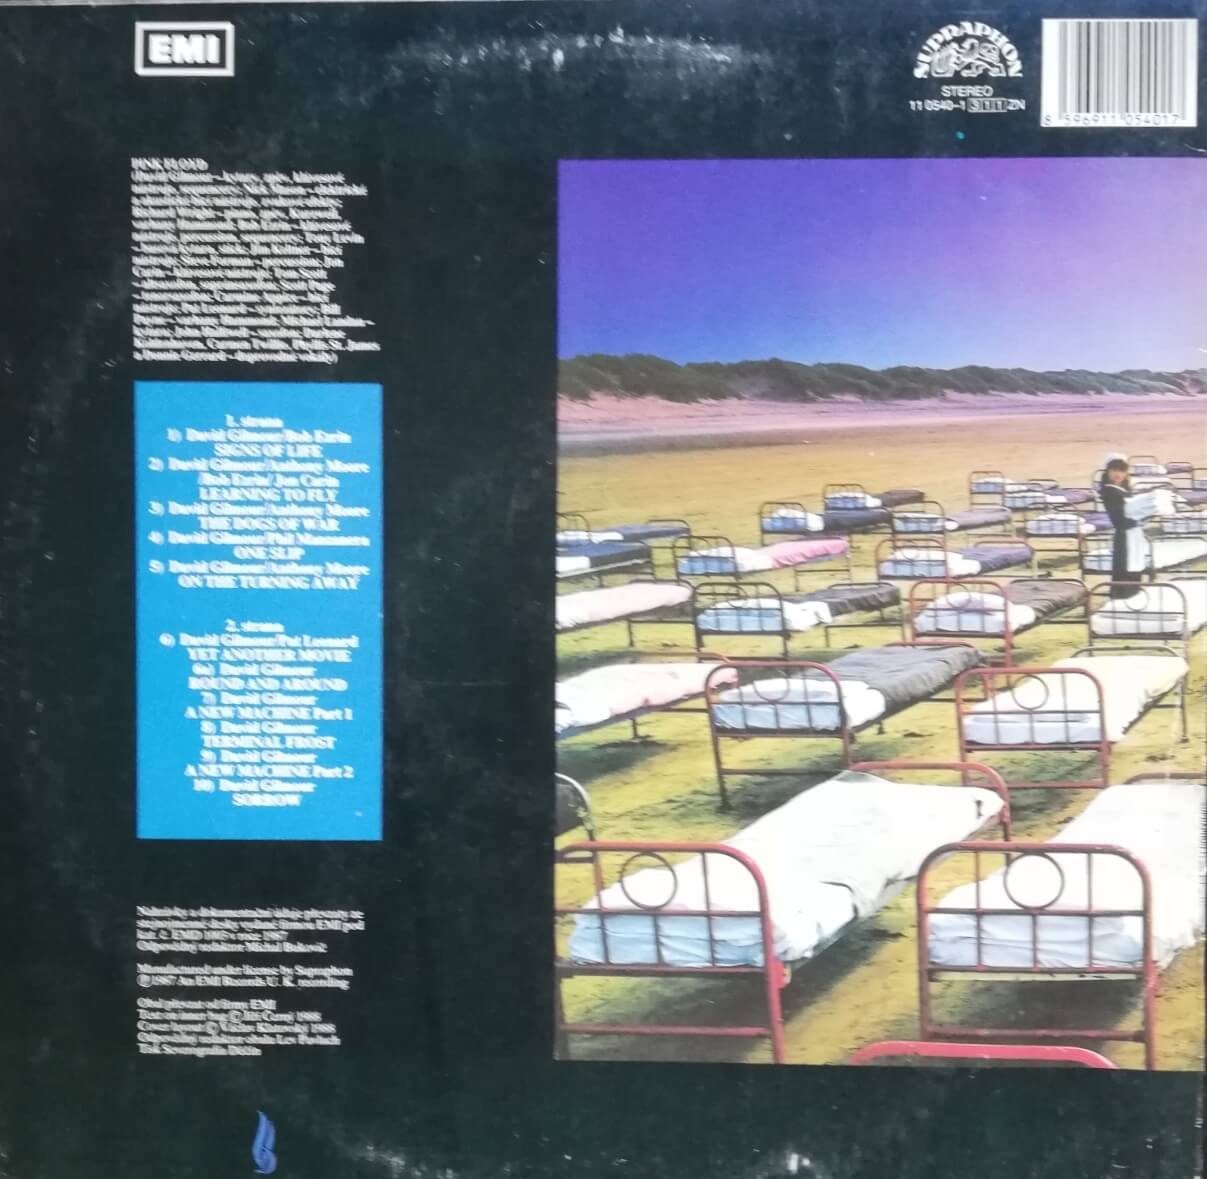 Okładka płyty winylowej artysty Pink Floyd o tytule A Momentary Lapse of Reason